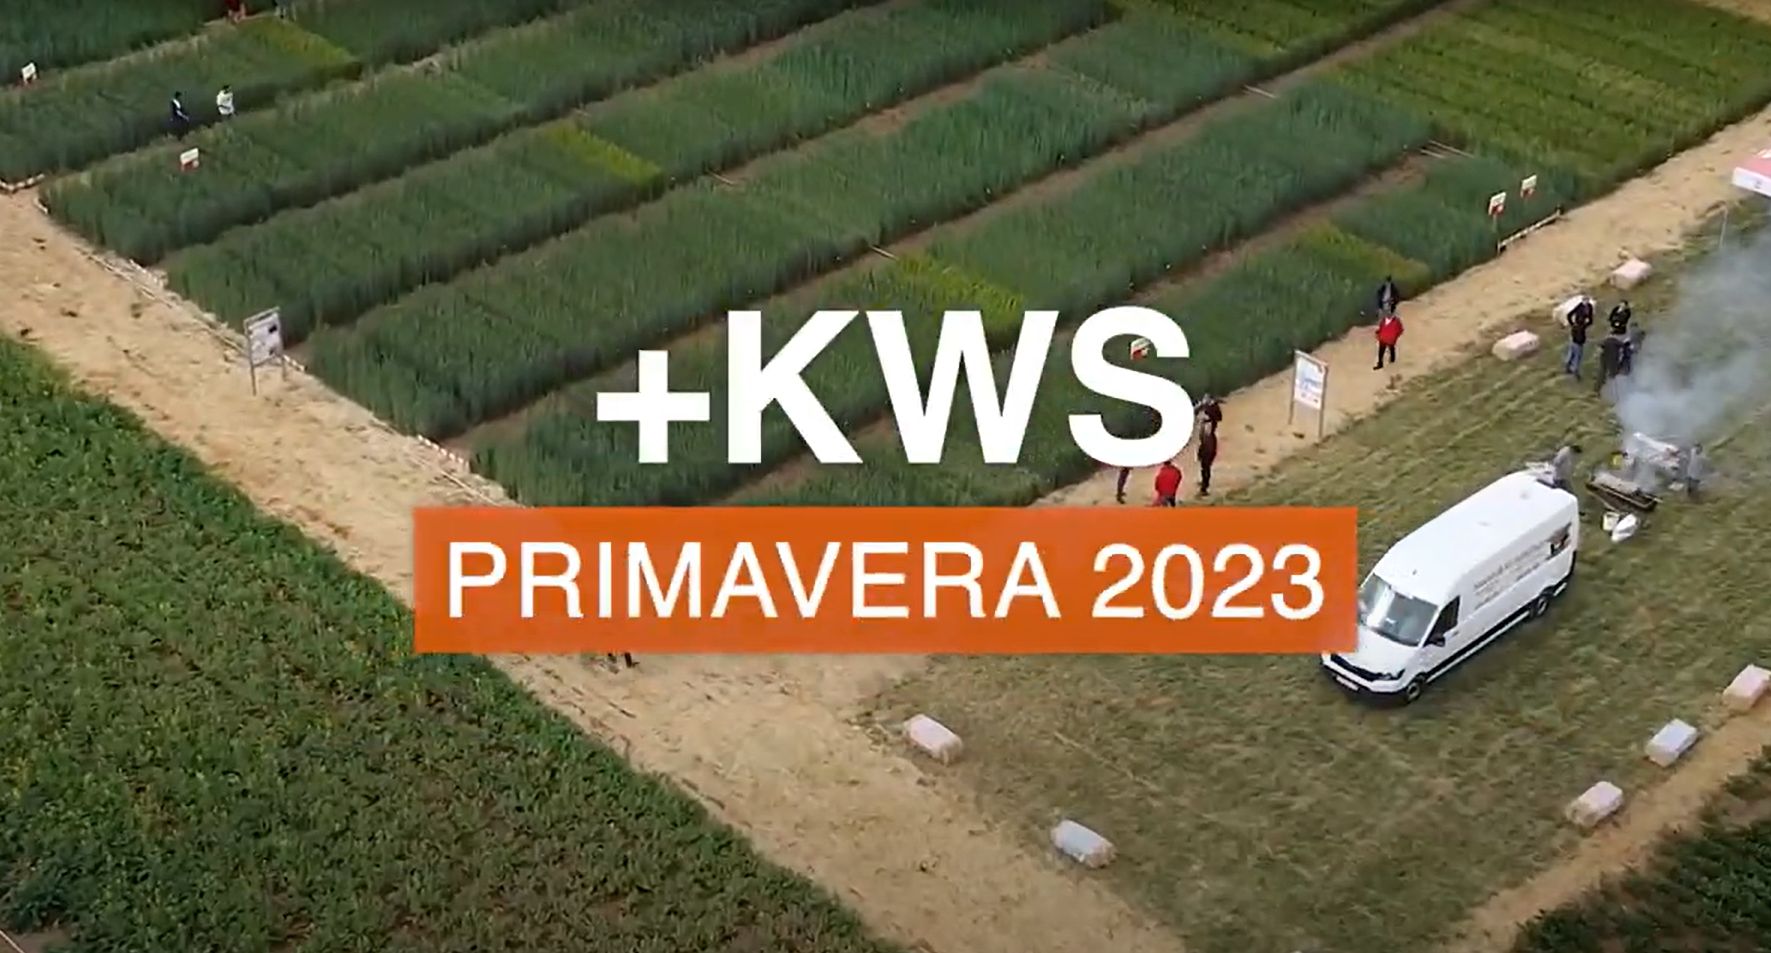 +KWS PRIMAVERA 2023